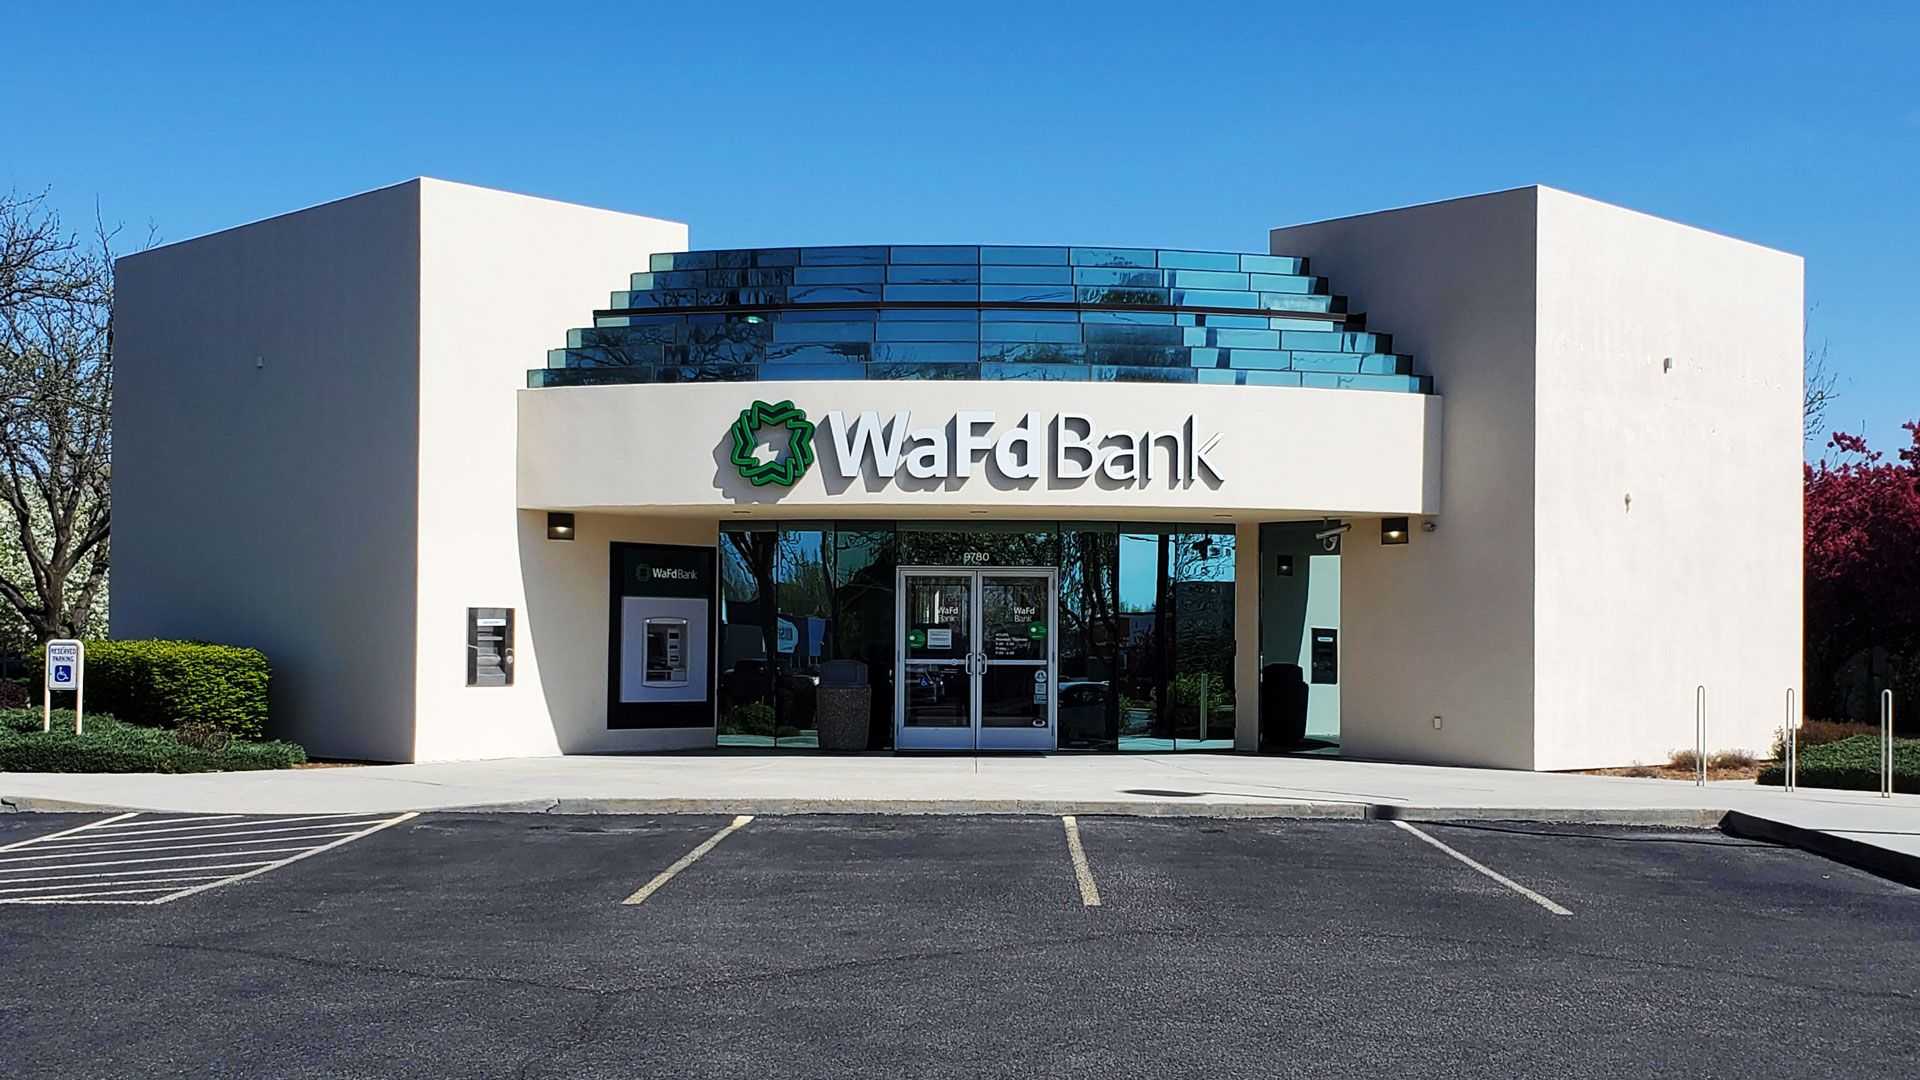 WaFd Bank in Boise, Idaho #1300 - Washington Federal.